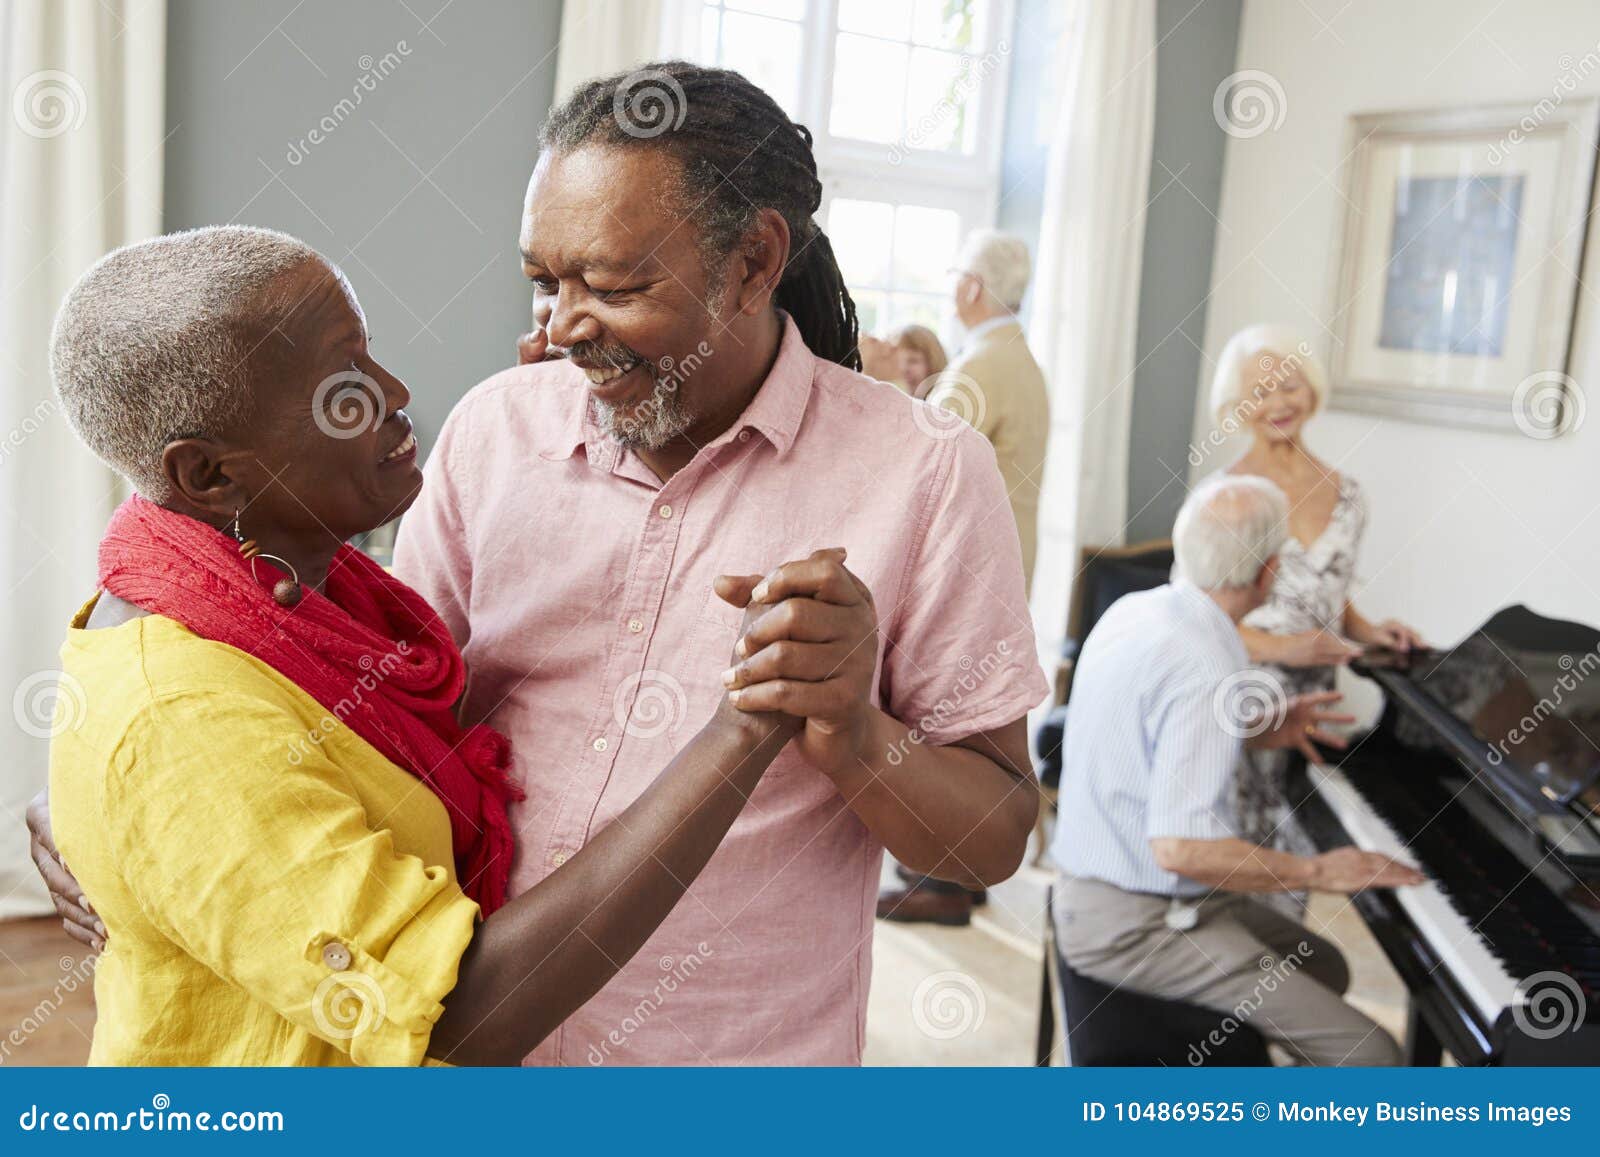 group of seniors enjoying dancing club together